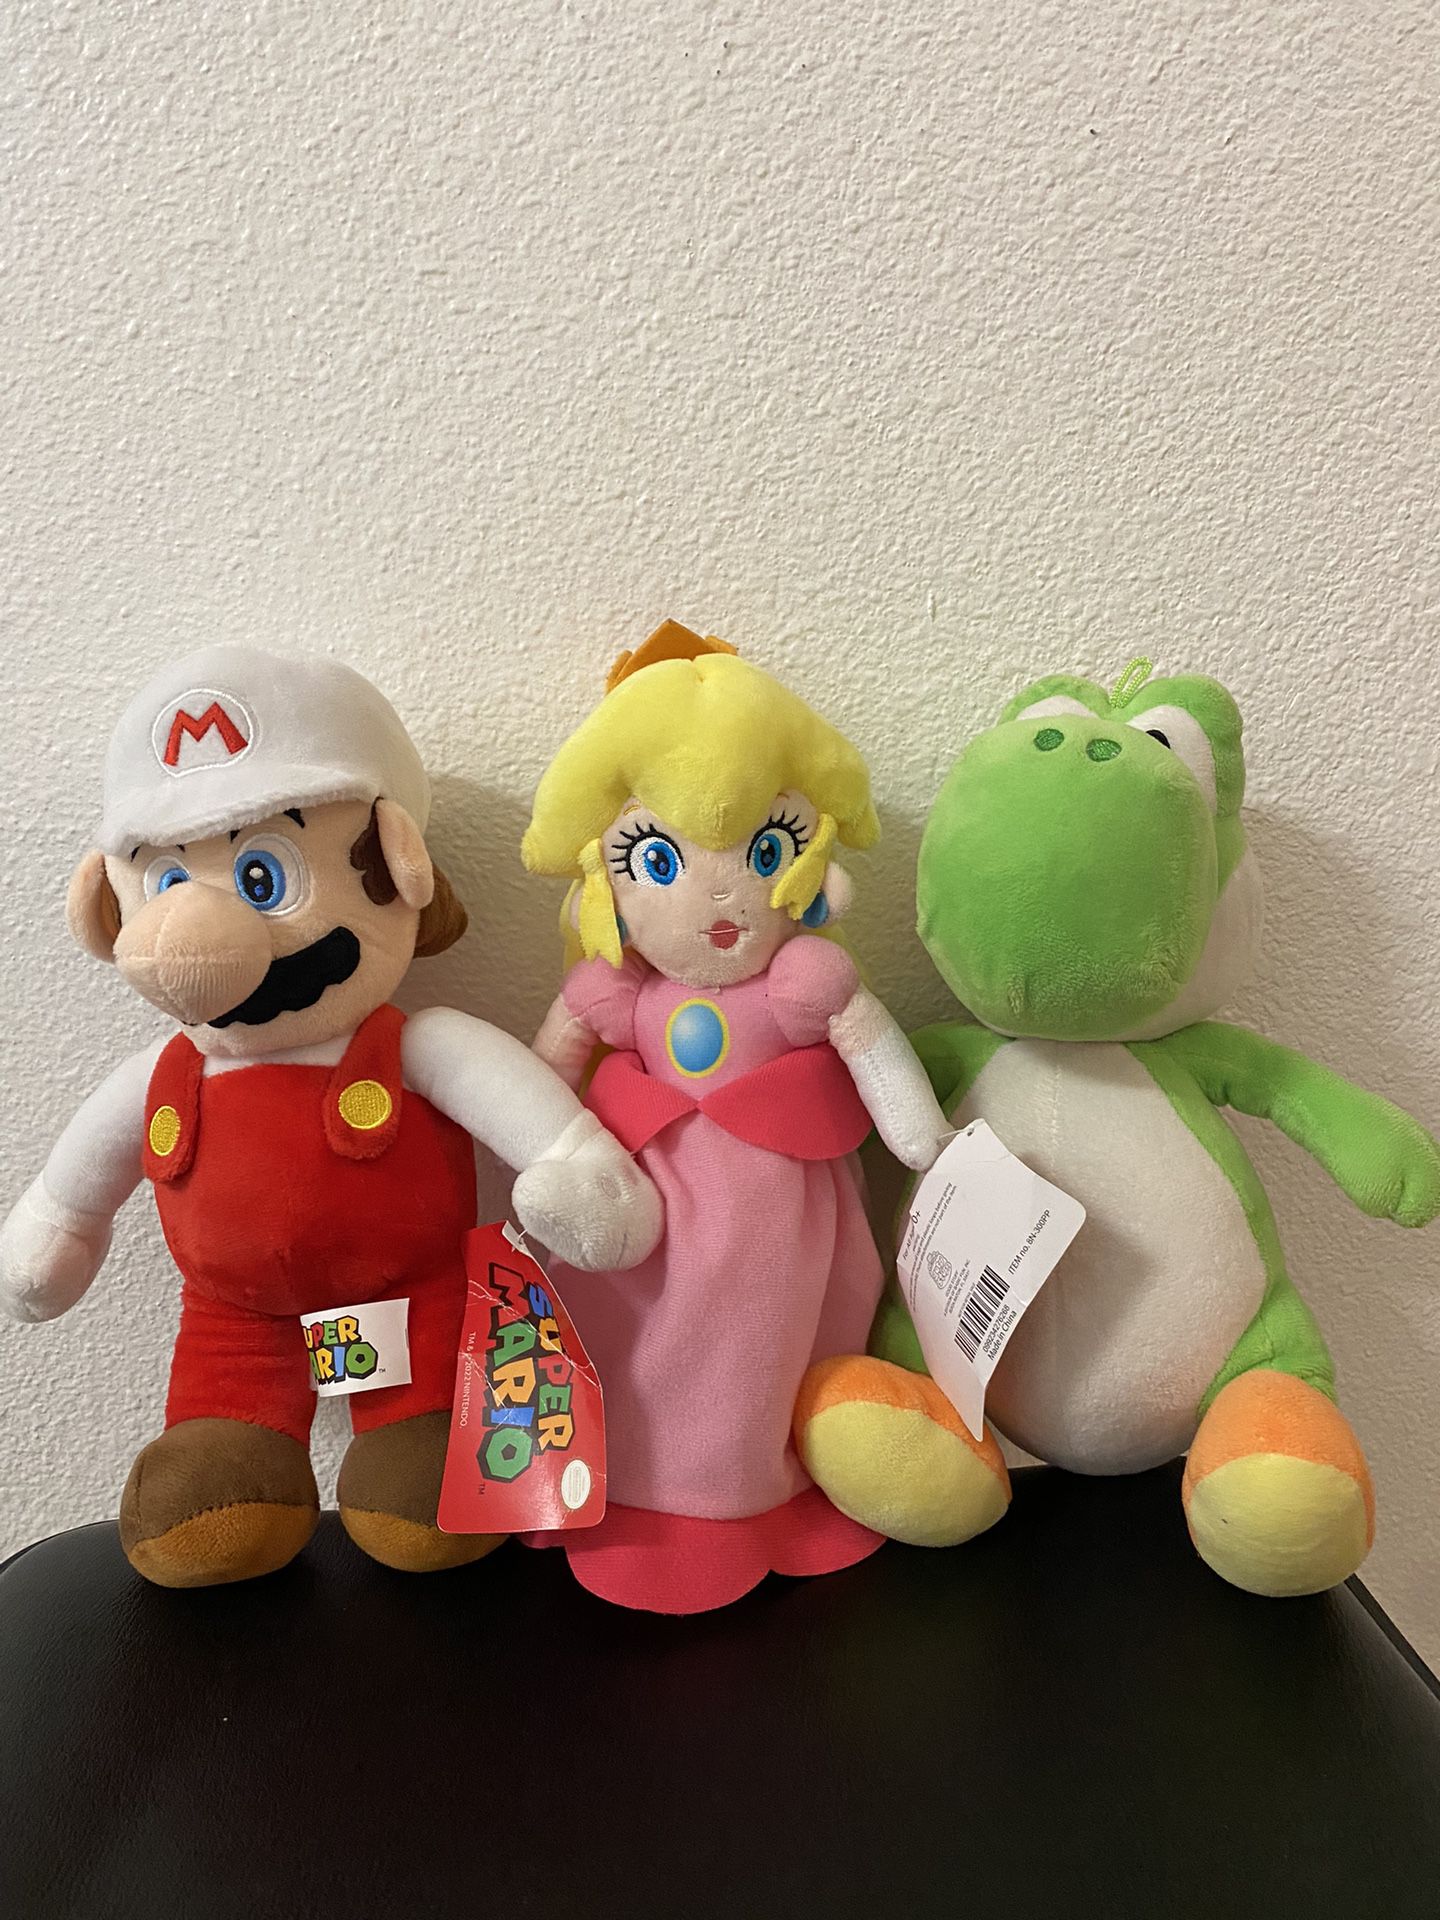 Super Mario Plush Toy Princess Peach And Yoshi 